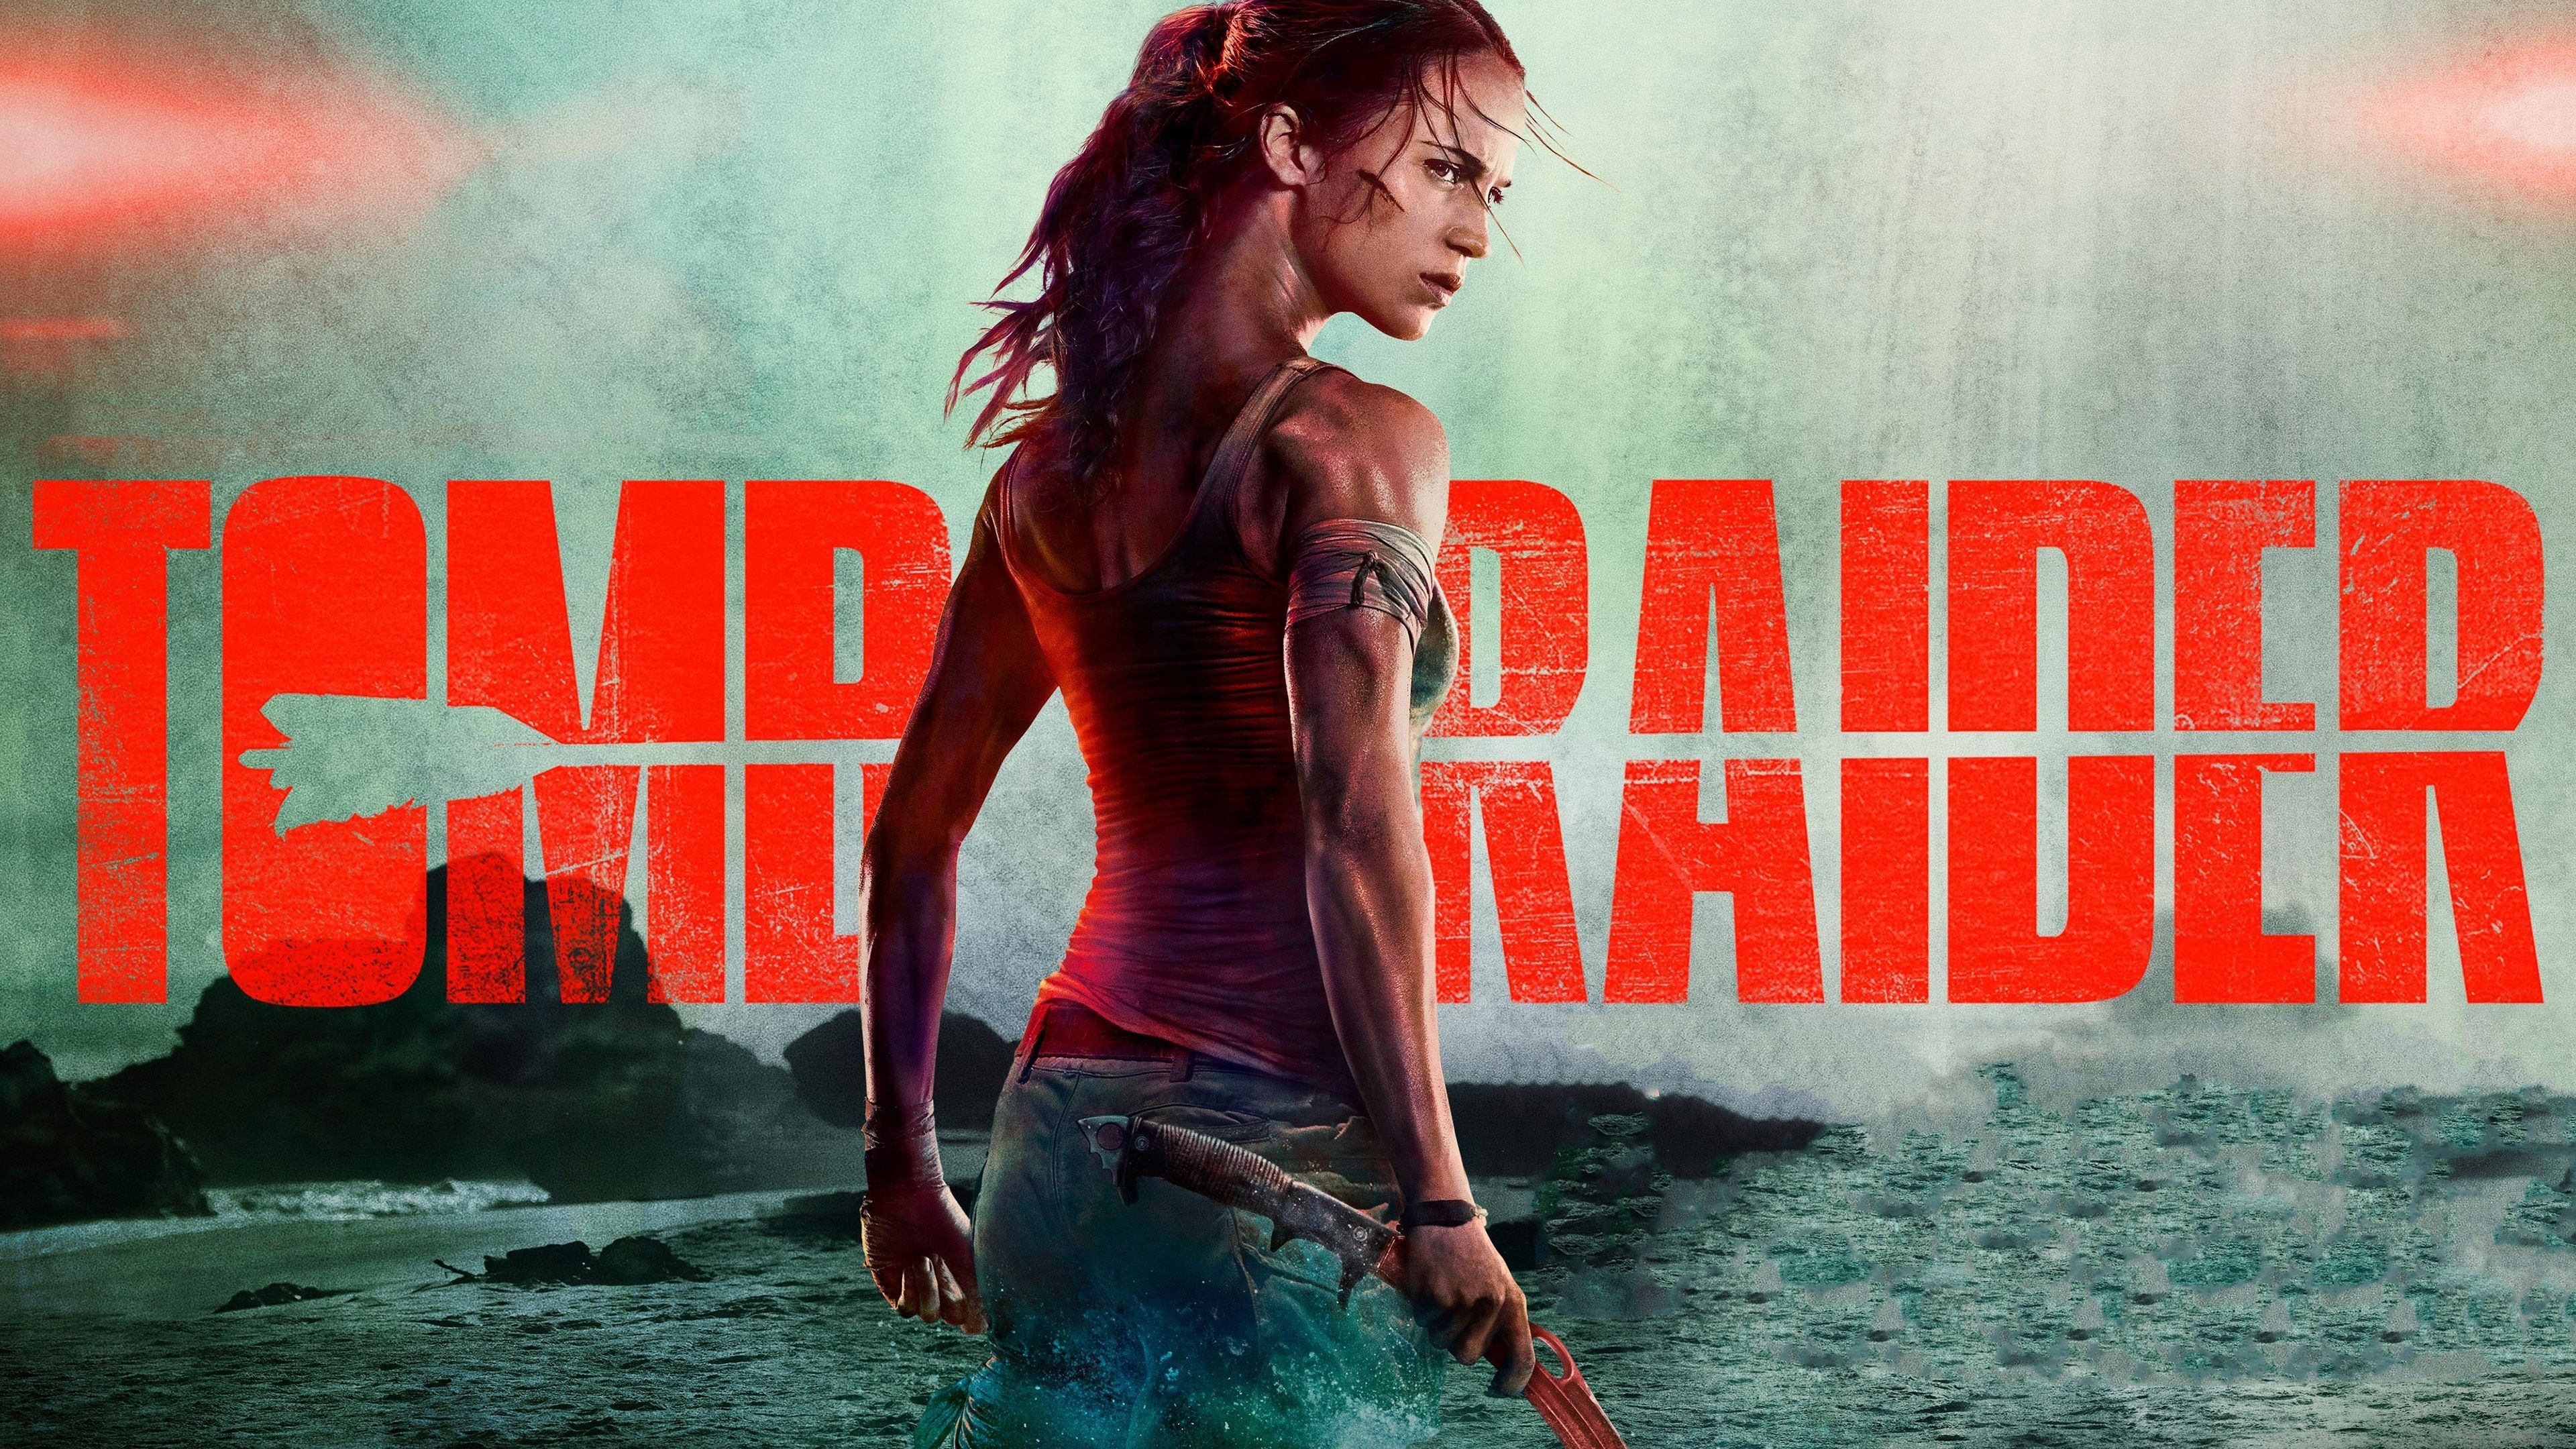 Lara Croft (Movie): A 2018 action-adventure film directed by Roar Uthaug, Poster. 3840x2160 4K Wallpaper.